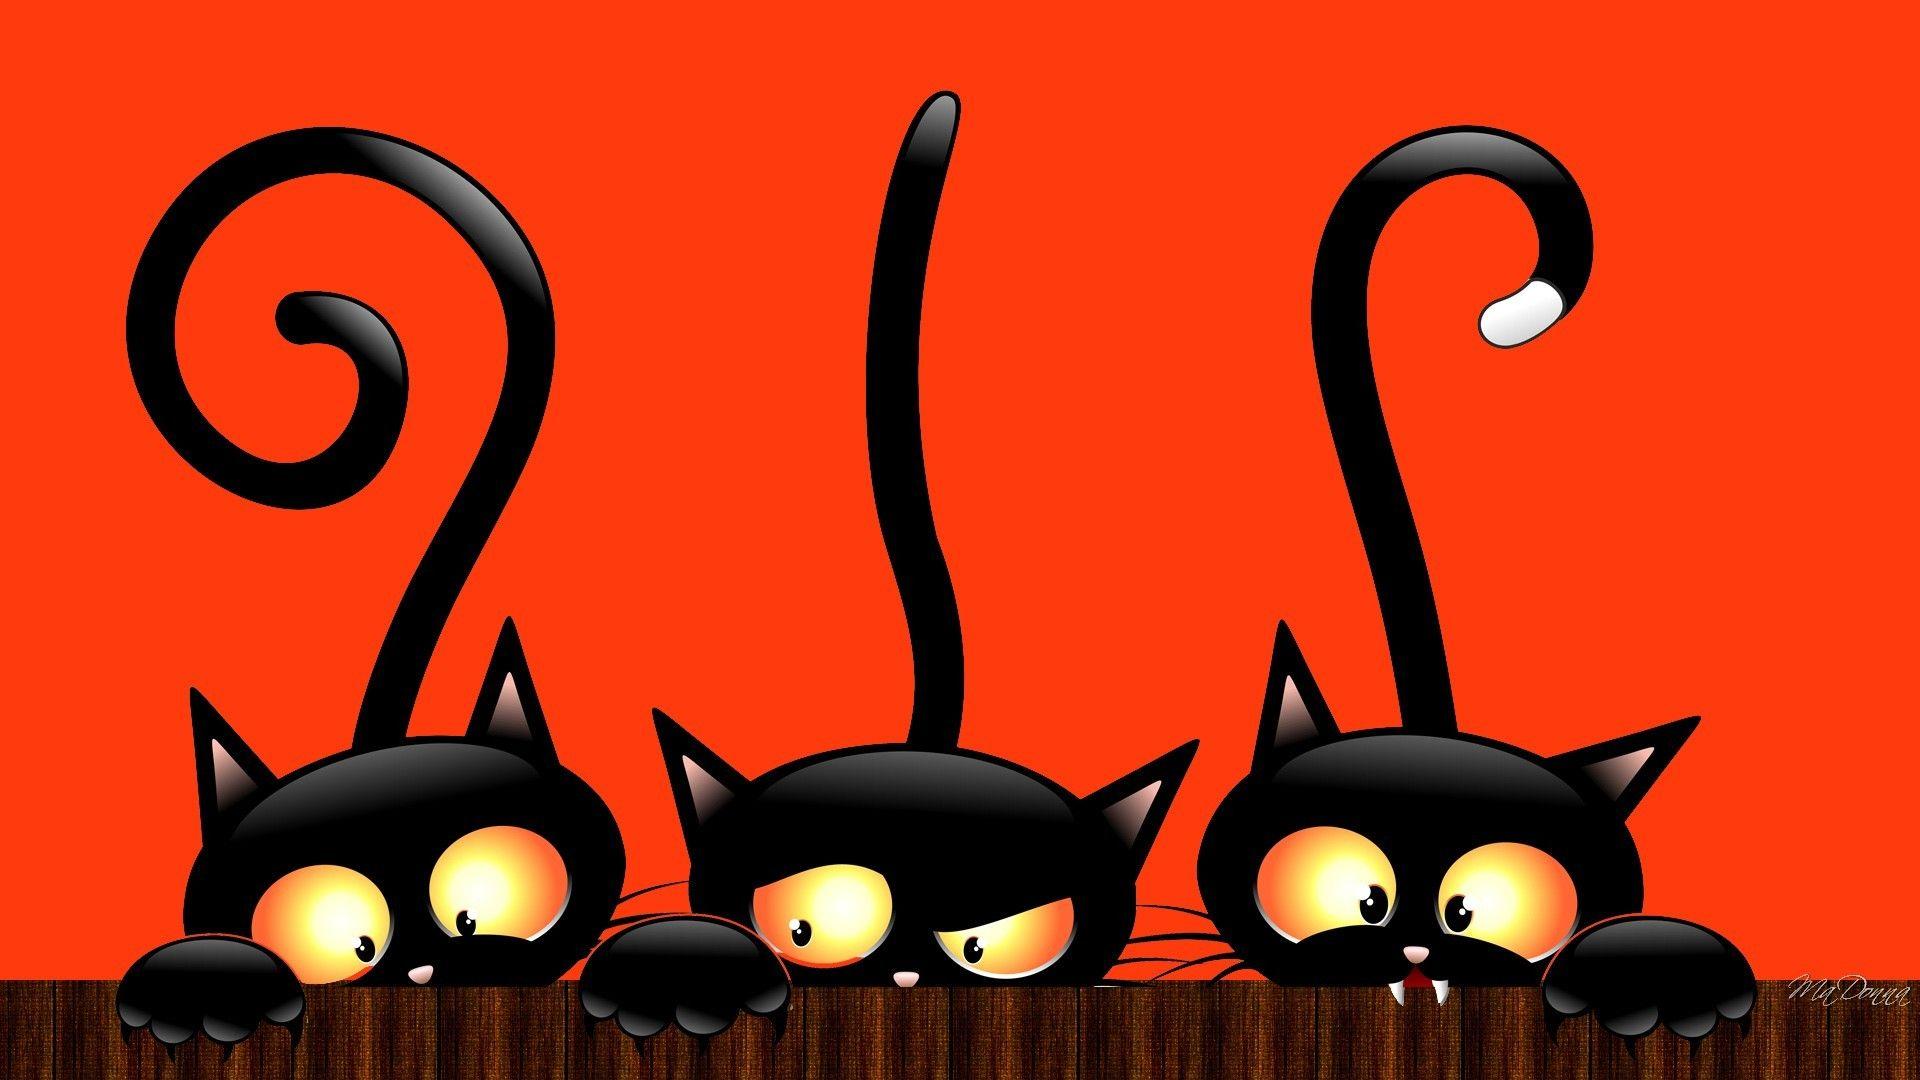 Simply: Black cat halloween peeking all hallows eve